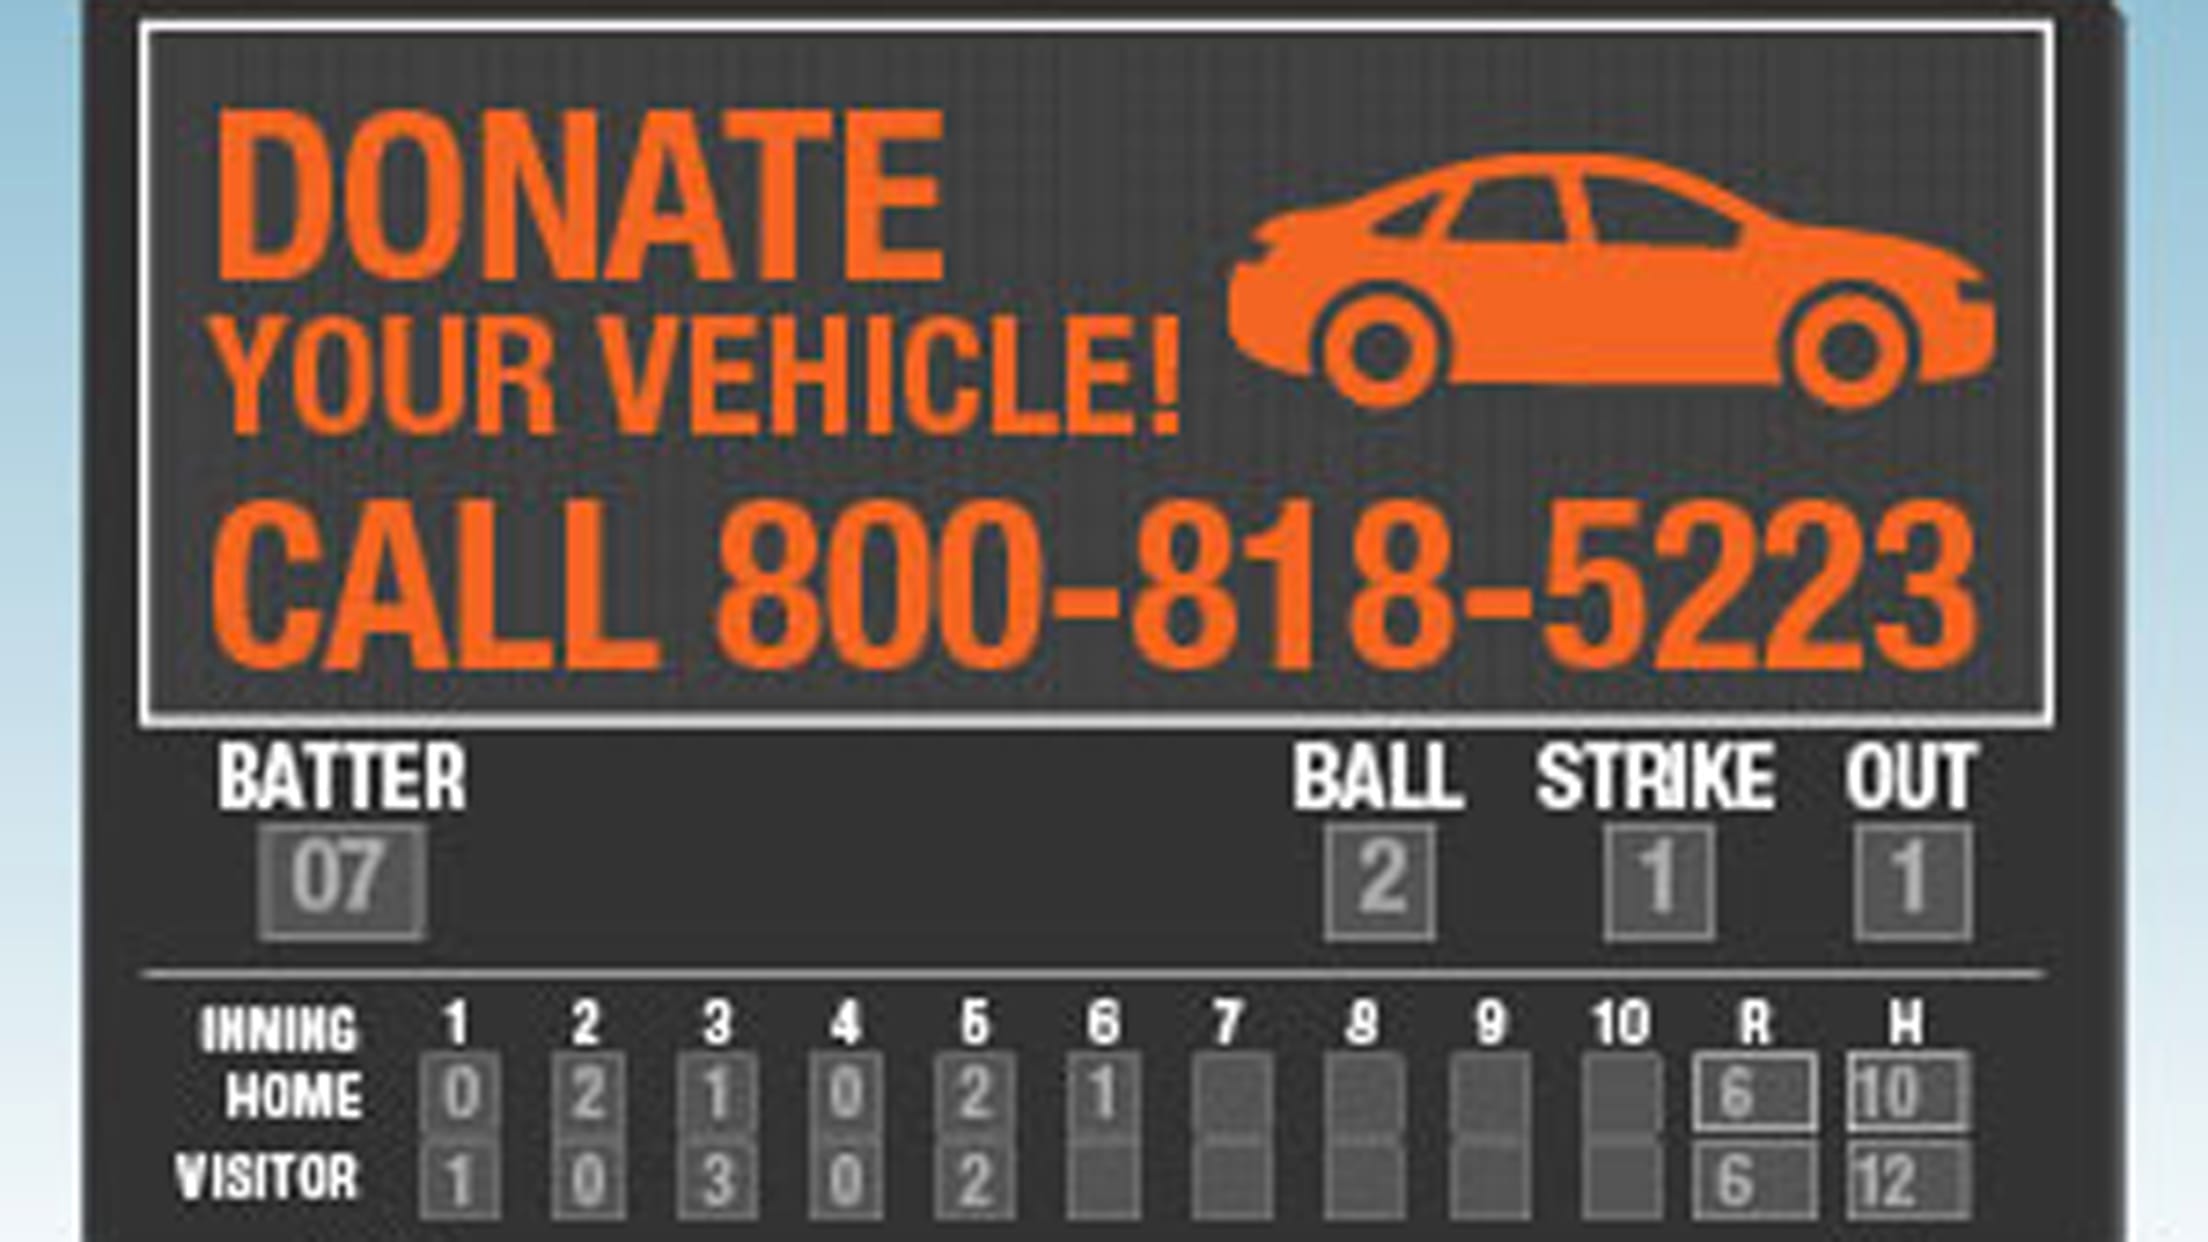 Junior Giants Car Donation, 04/20/2023